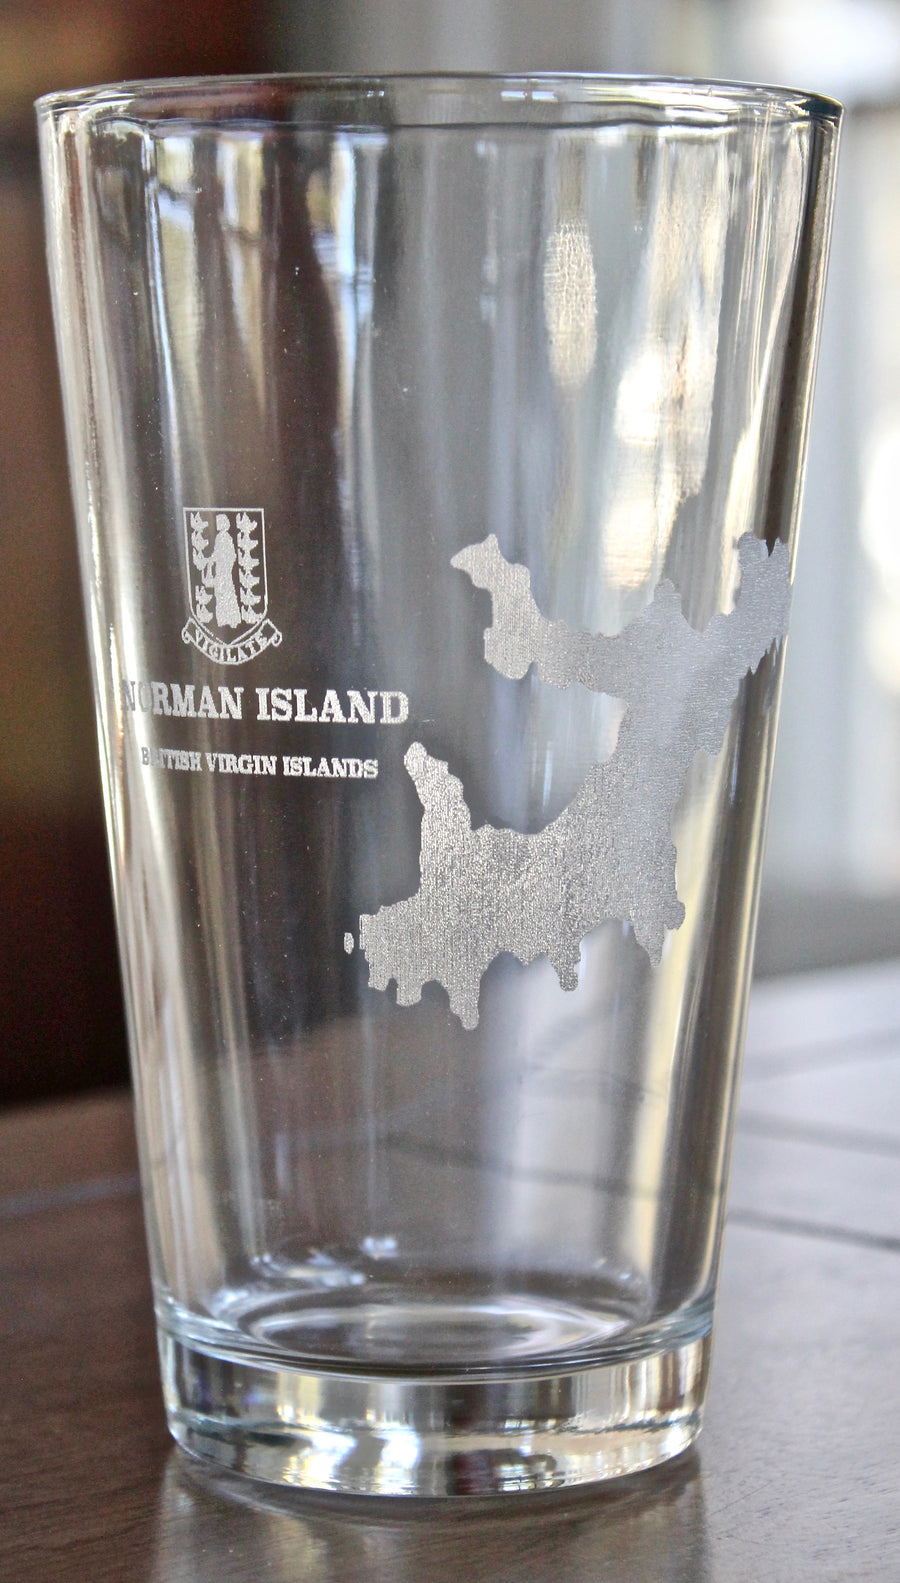 Norman Island BVI Map Glasses